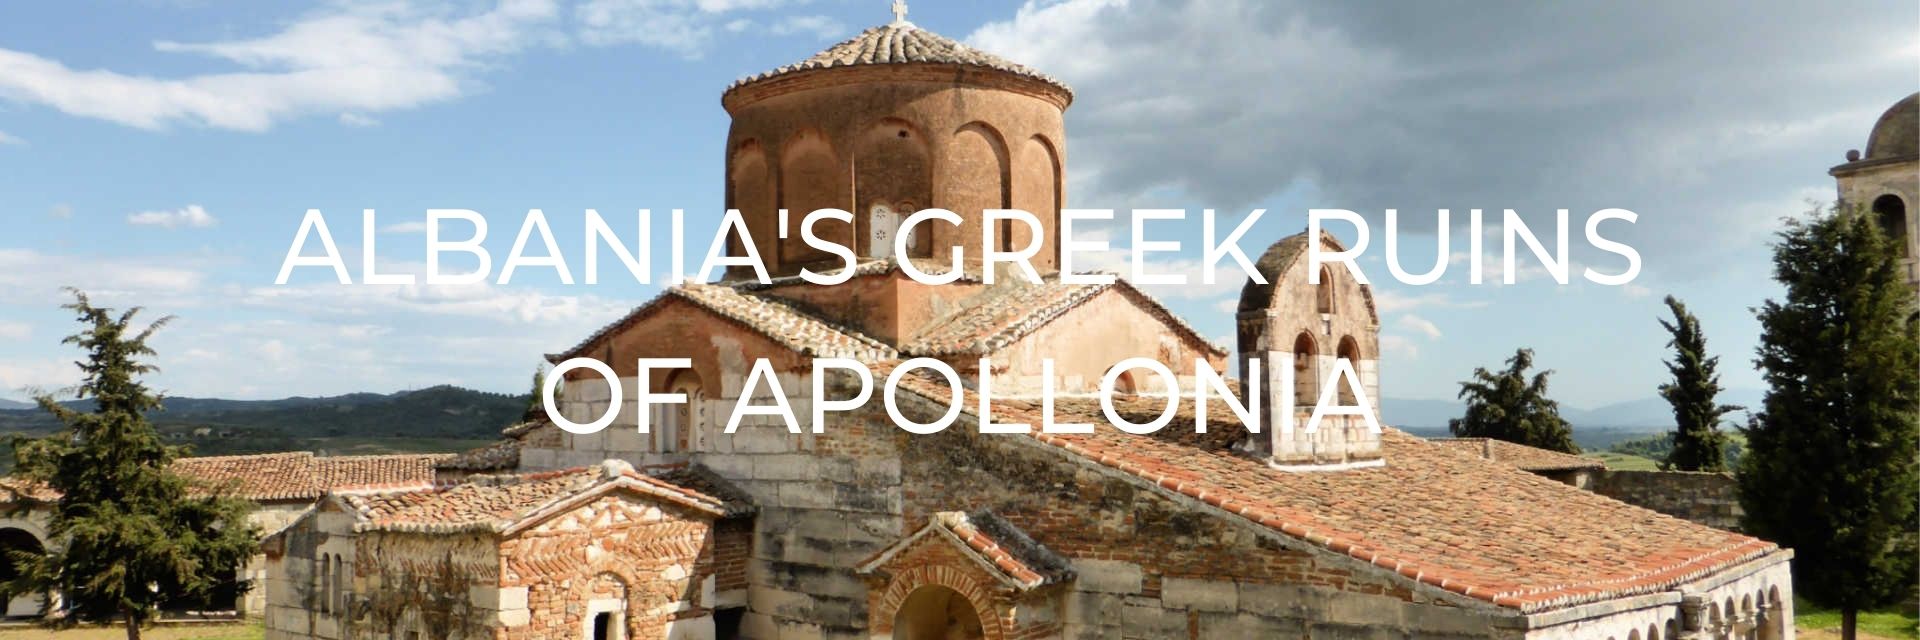 Albania's Greek Ruins of Apollonia Desktop Header